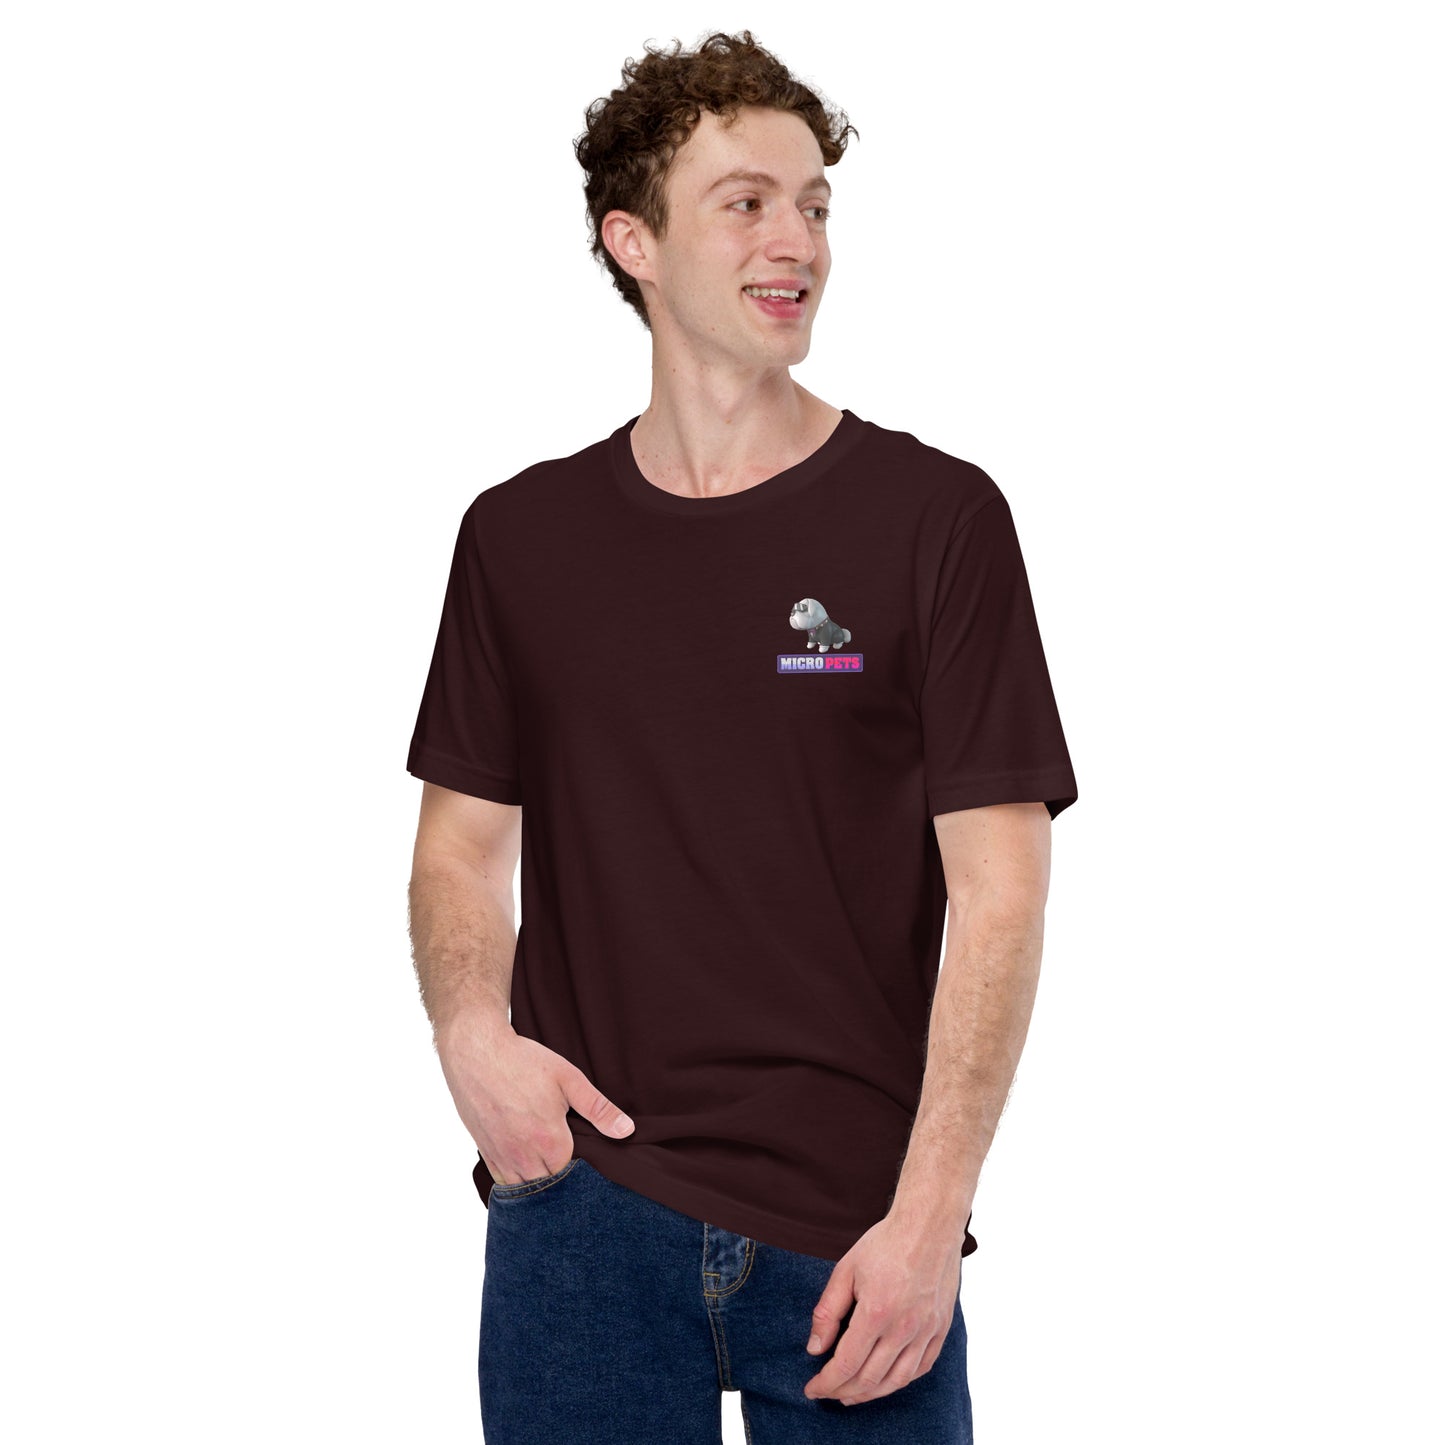 MicroPets Hoge Unisex T-Shirt